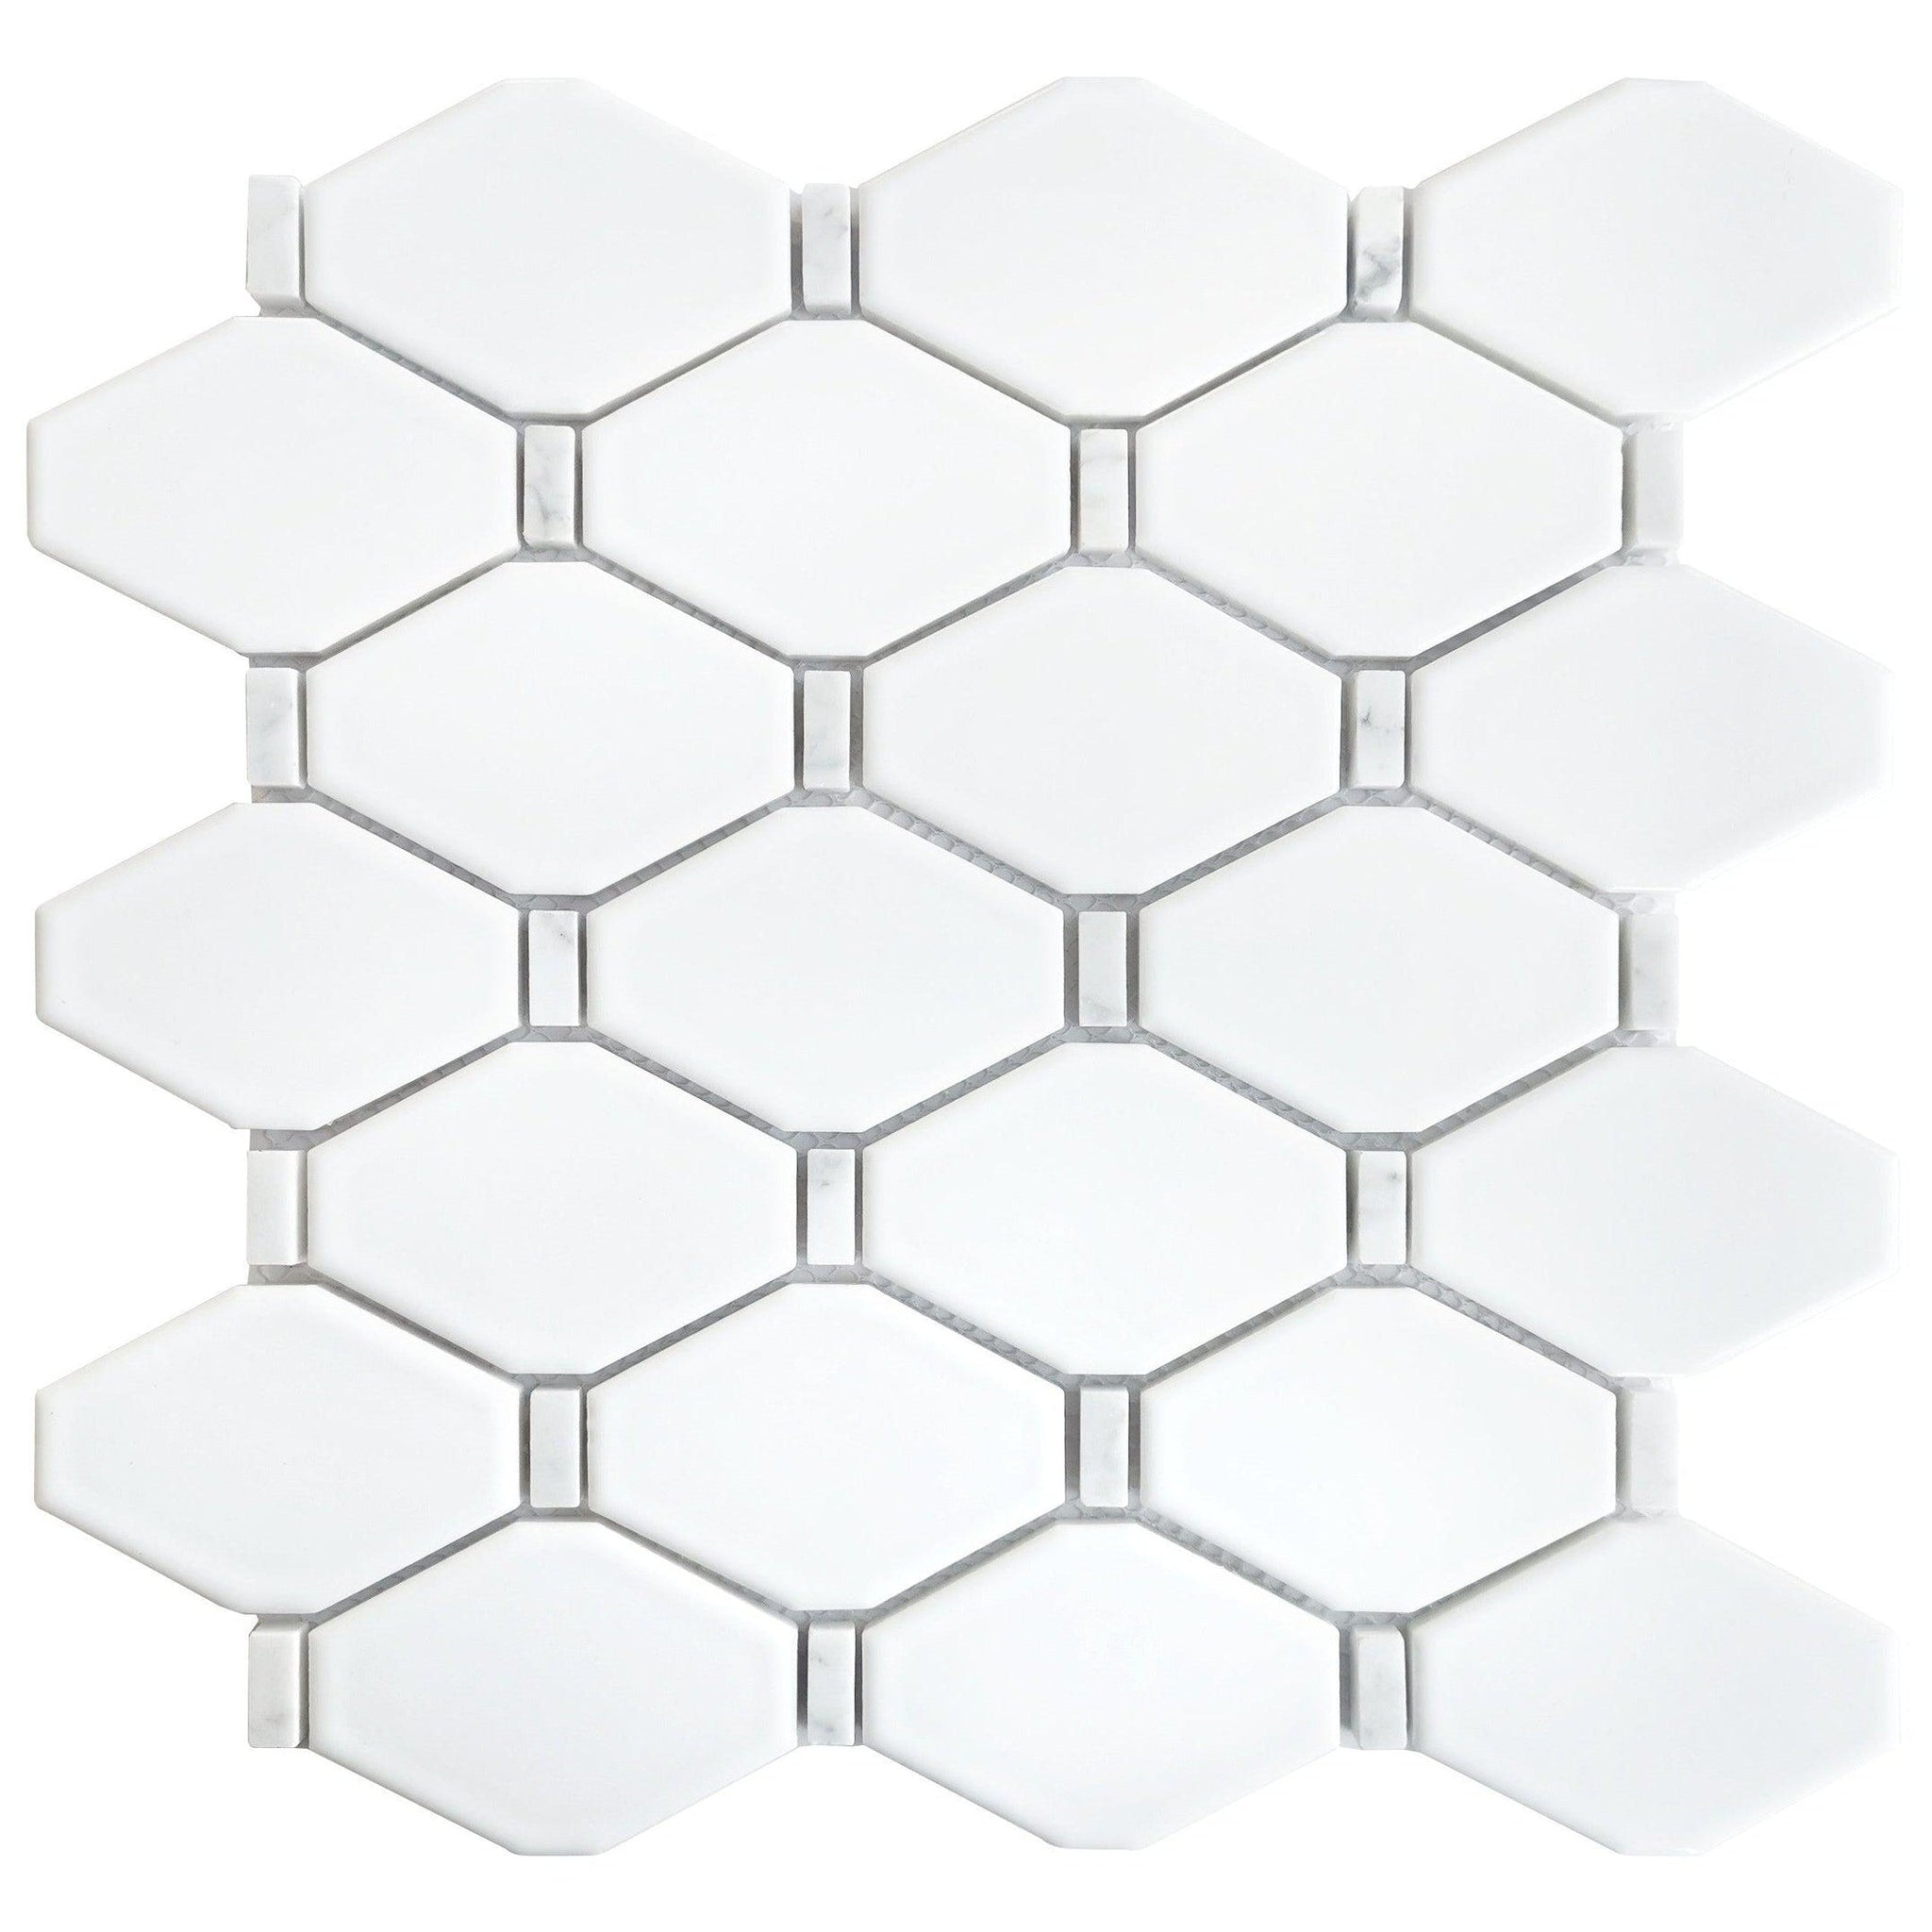 Altair, Altair Badajoz 11 pcs. Diamond White Glass Mosaic Floor and Wall Tile